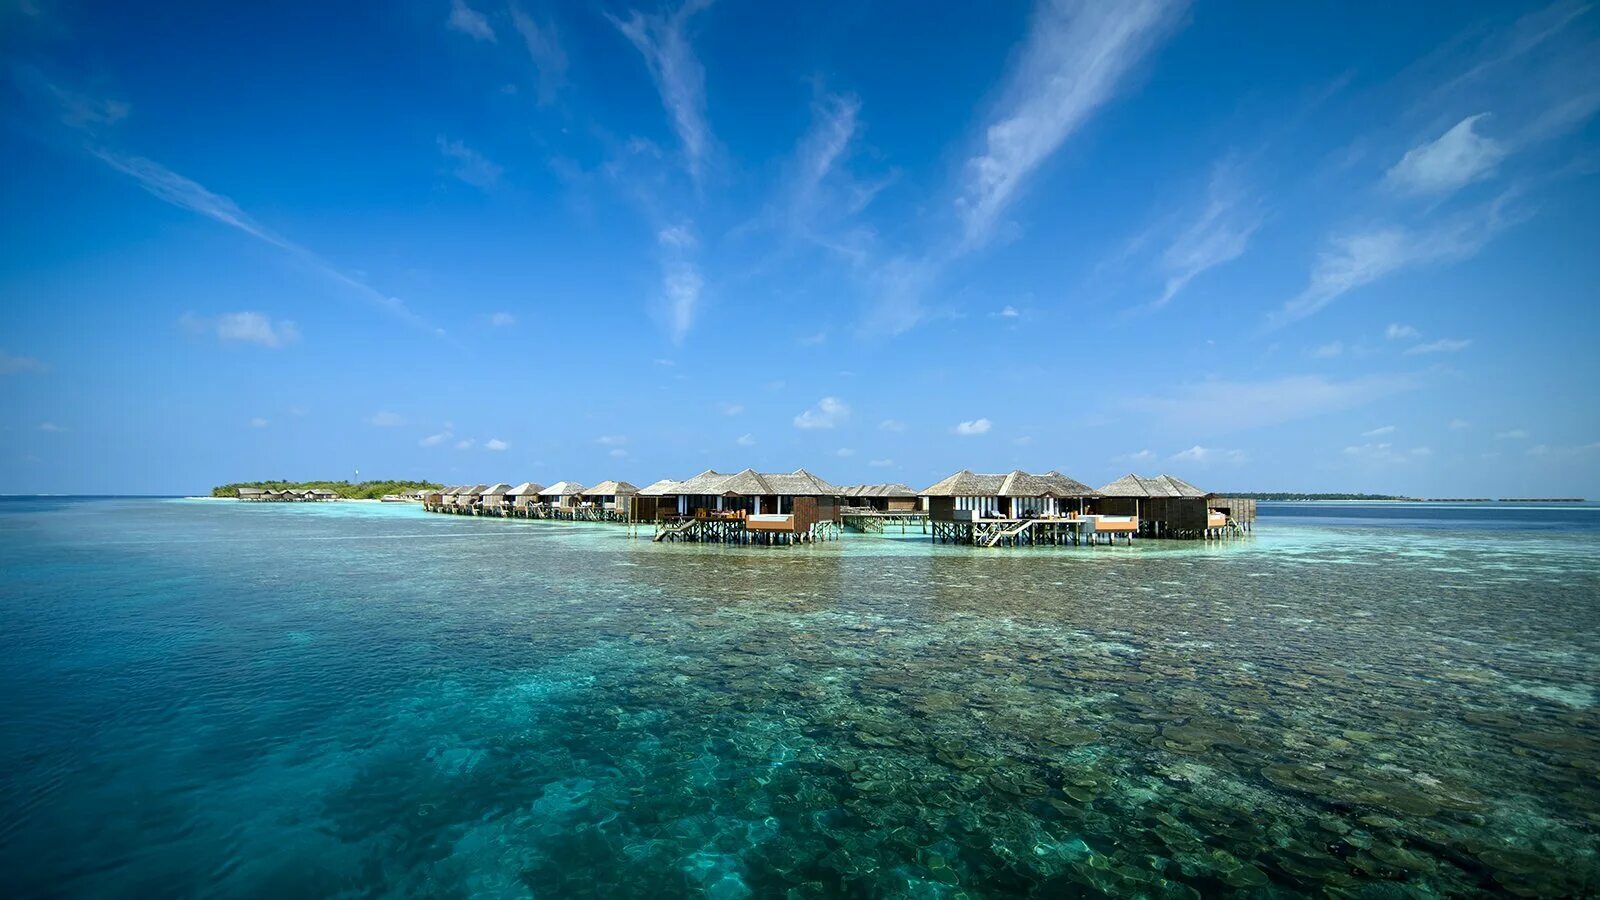 Lily Beach Resort Spa 5. Мальдивы панорама. Шератон Мальдивы фото. Www island